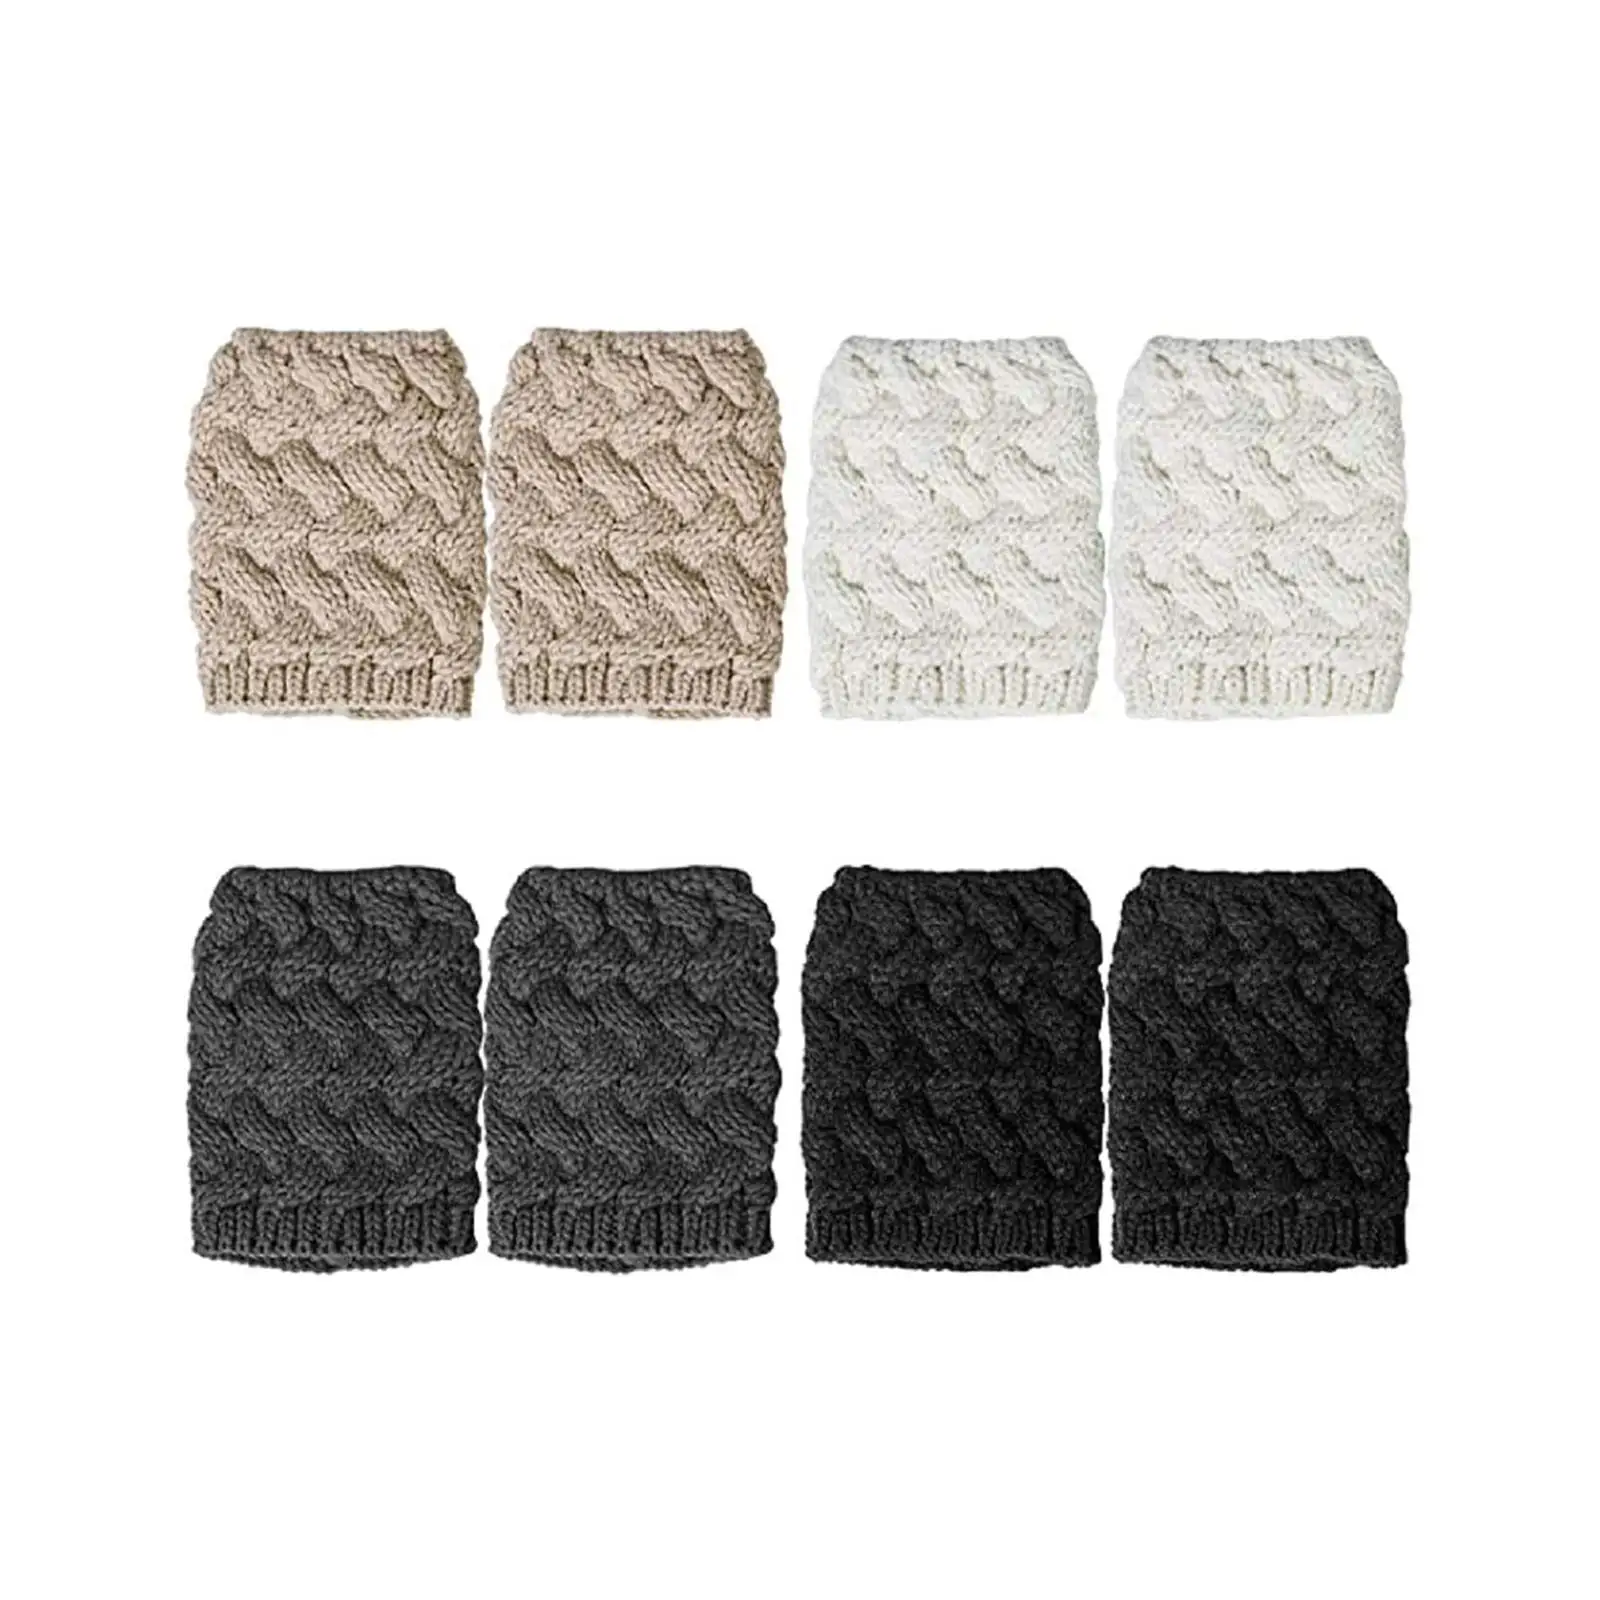 4 Pairs Boot Cuffs Socks Winter Warm Crochet Knitted Boot Cuffs Topper, Made of Acrylic Fibers, Short Leg Warmers